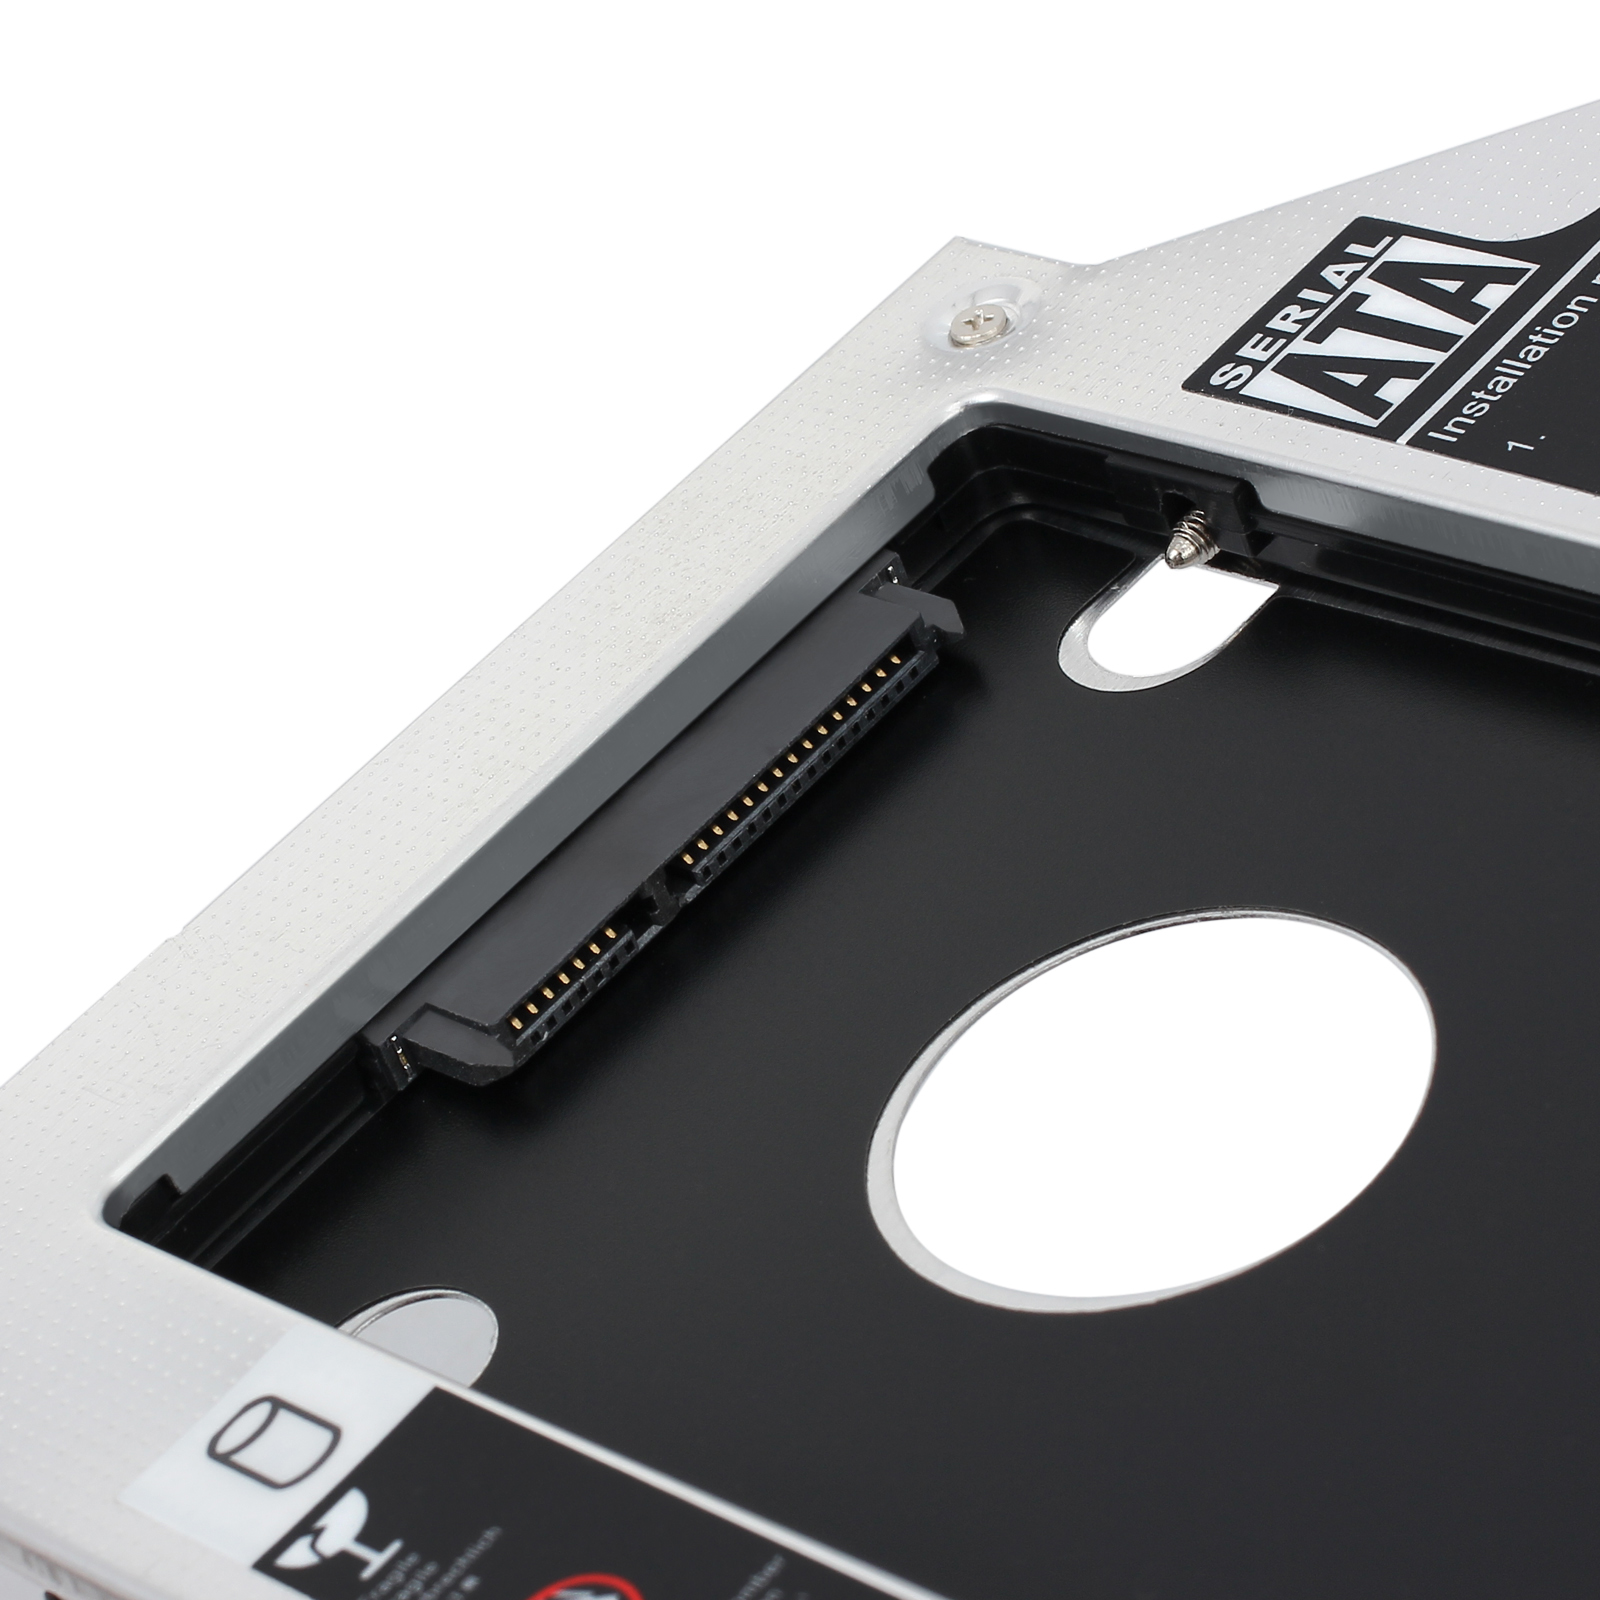 external hard drives for macbook pro ebay